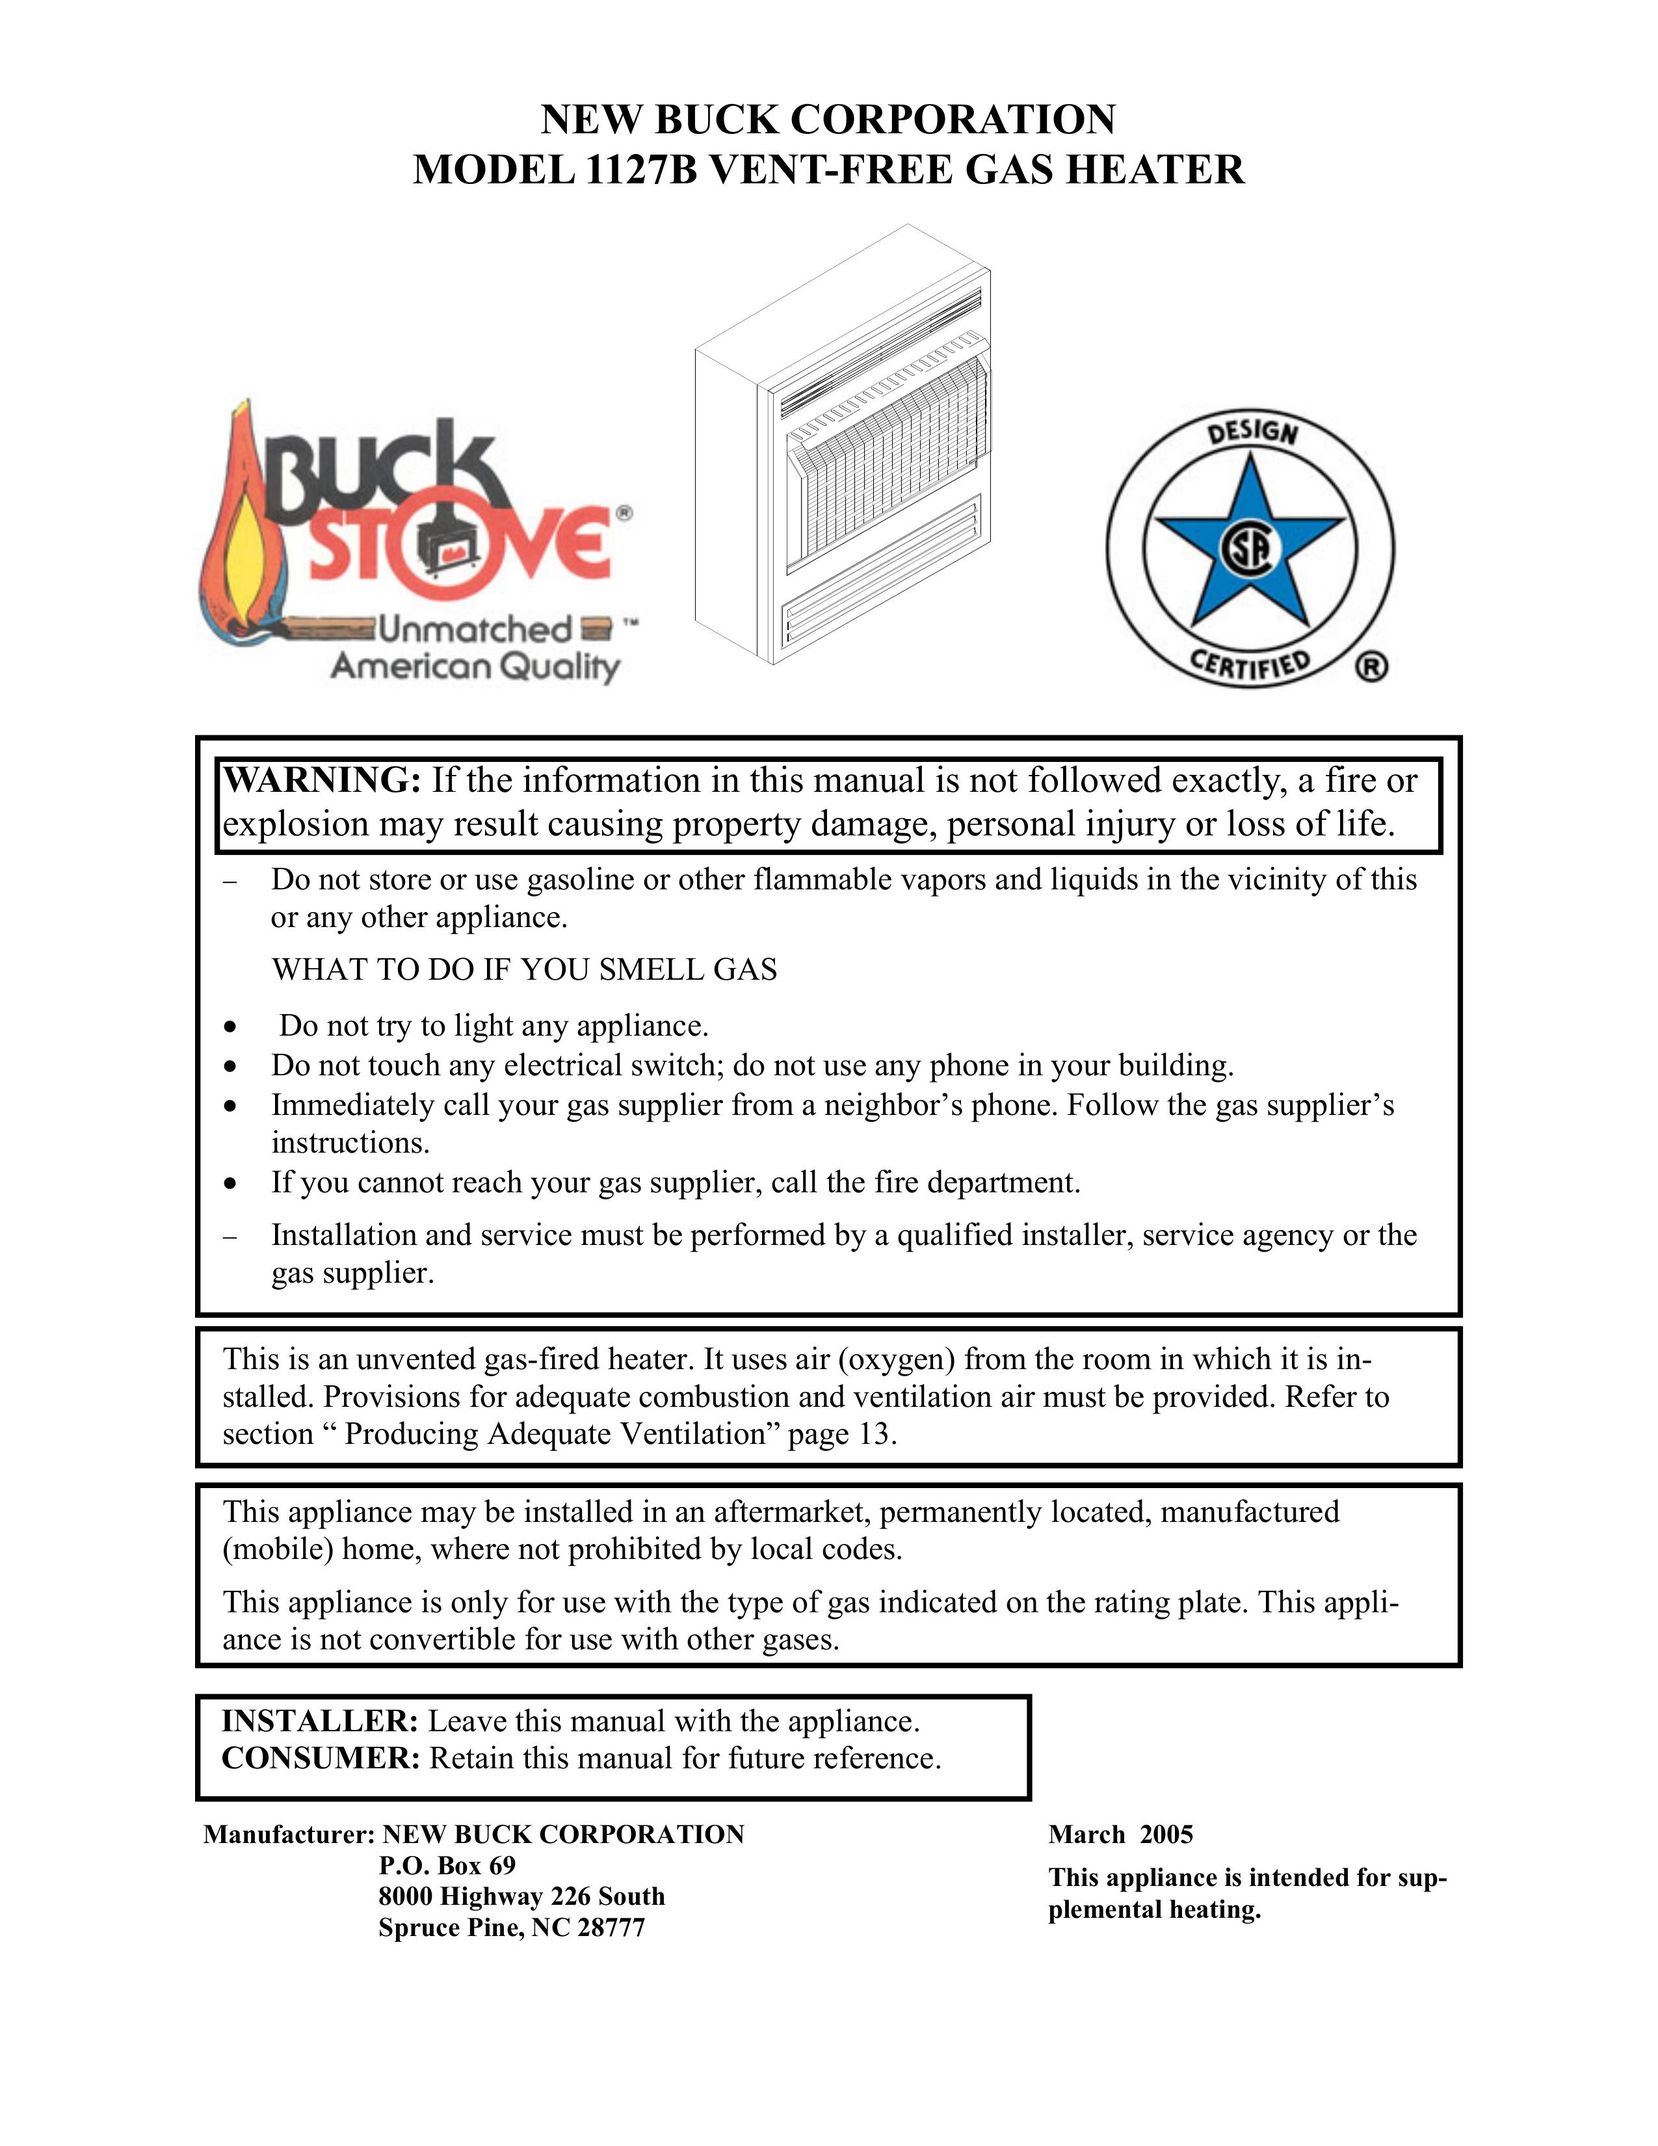 New Buck Corporation 1127B Gas Heater User Manual